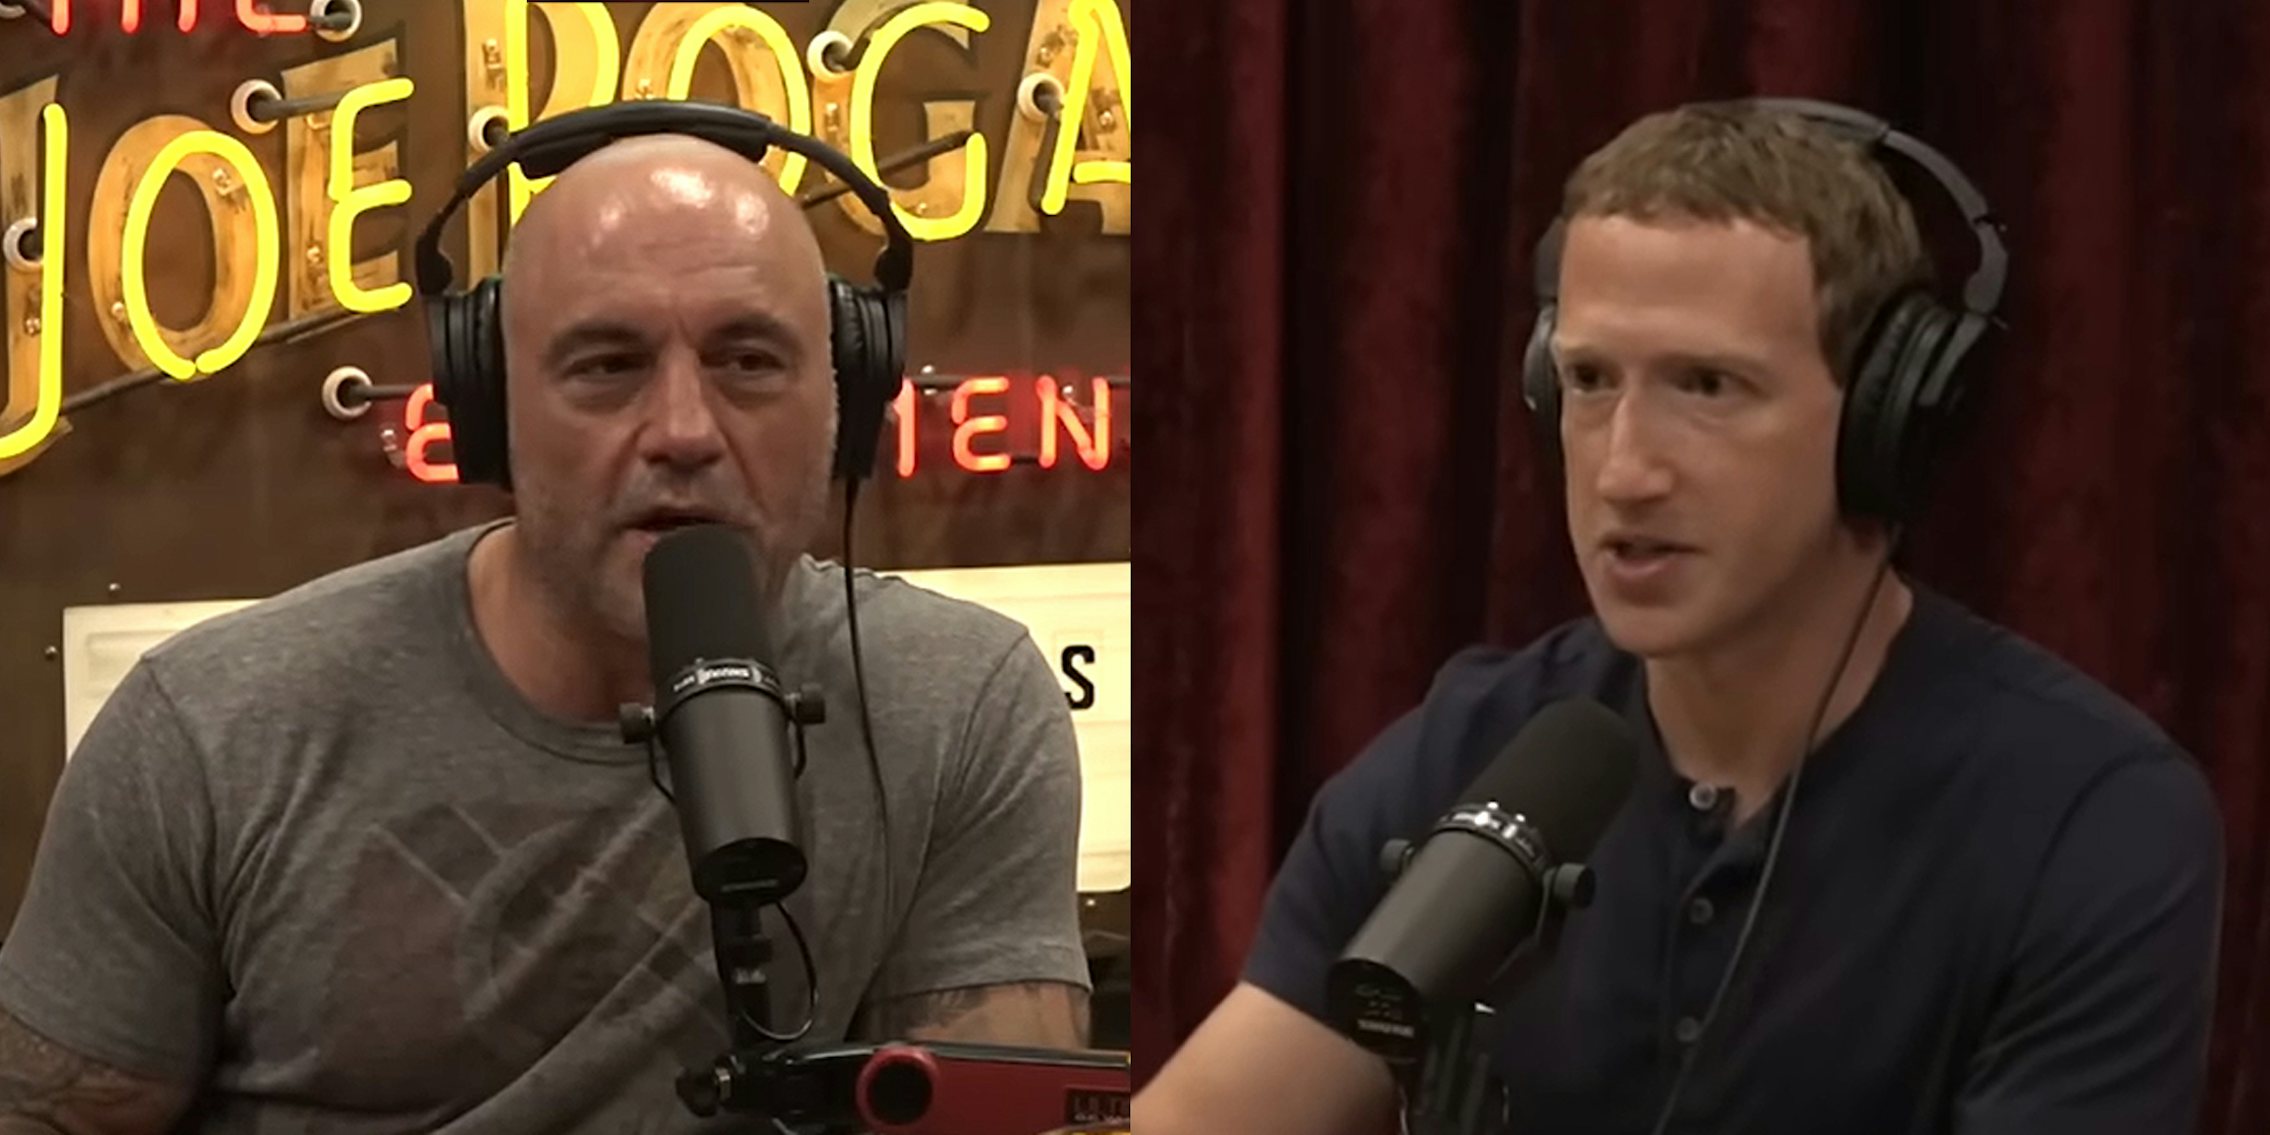 Joe Rogan speaking on podcast (l) Mark Zuckerberg speaking on podcast on red background (r)